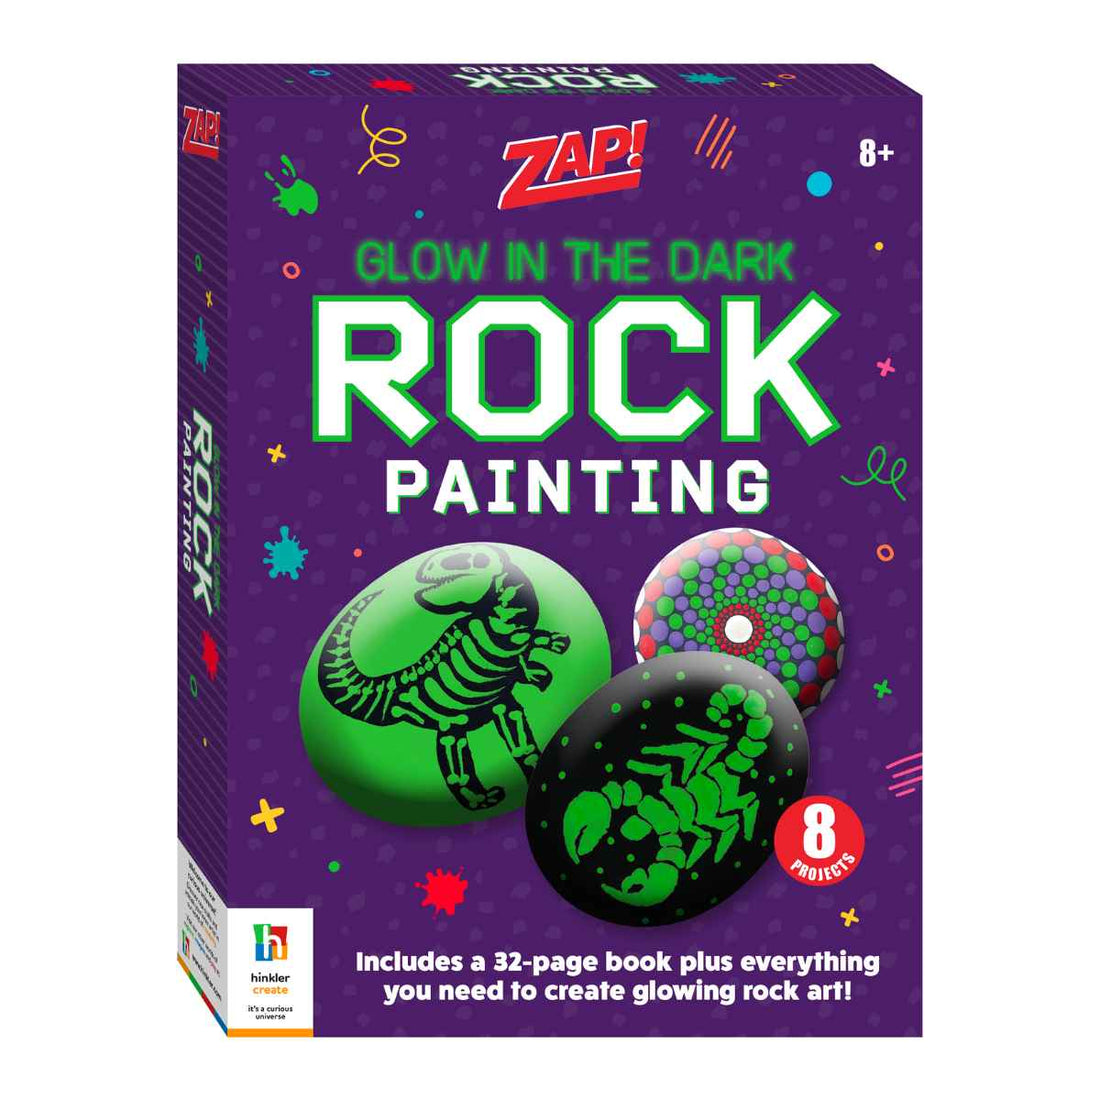 Glow In The Dark Rock Painting Art Kit